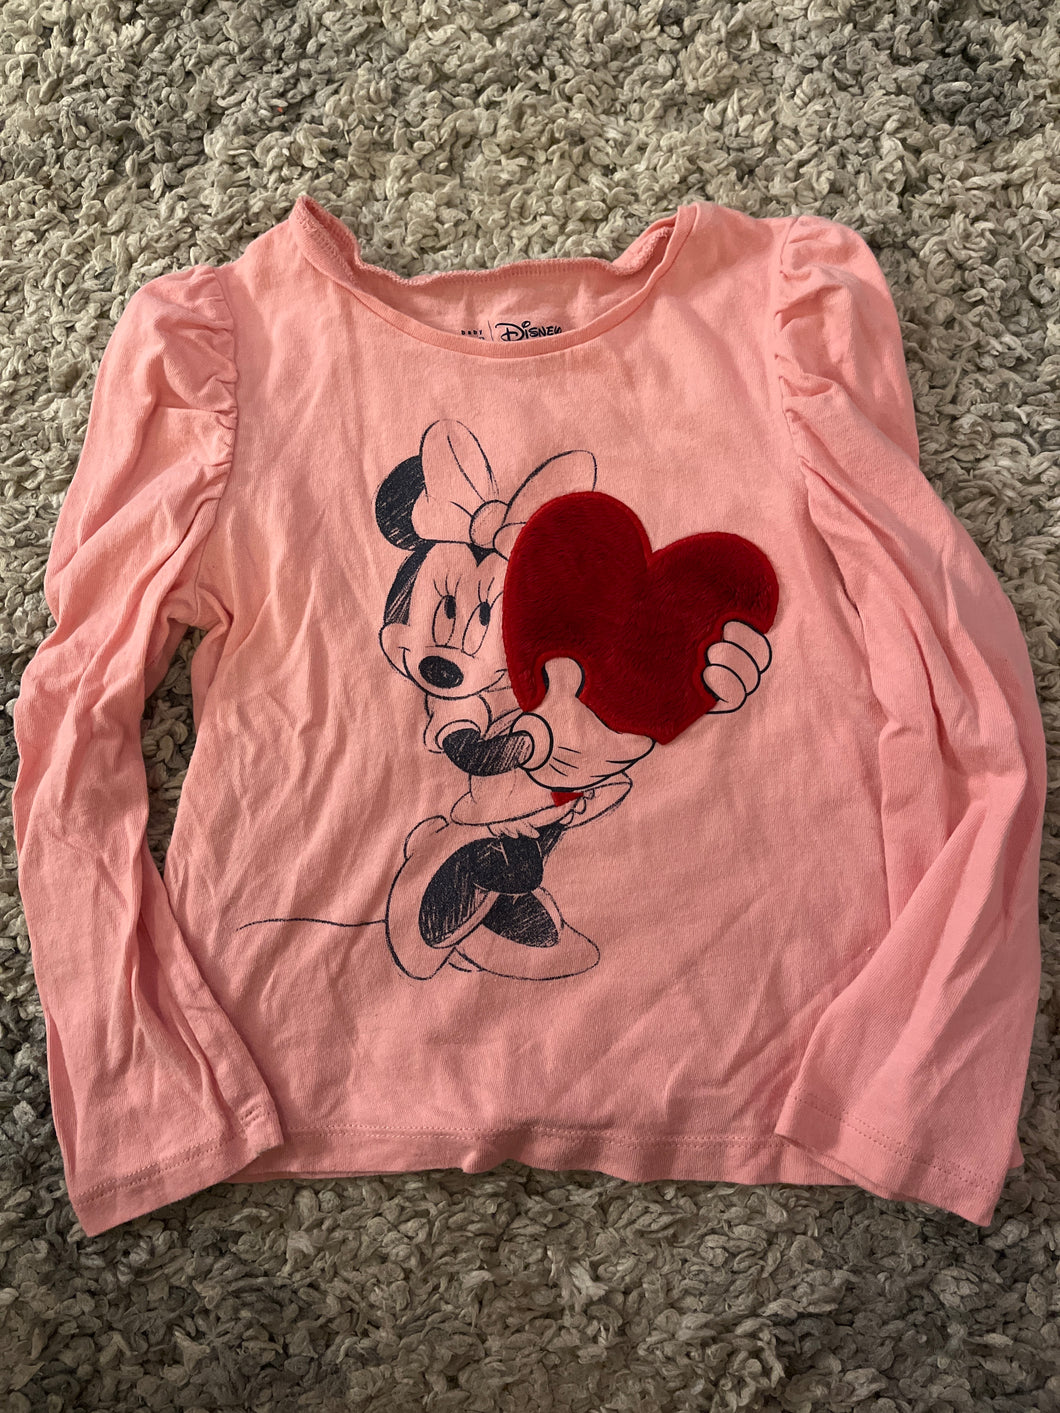 Baby gap like new pink Minnie shirt with fuzzy heart 4